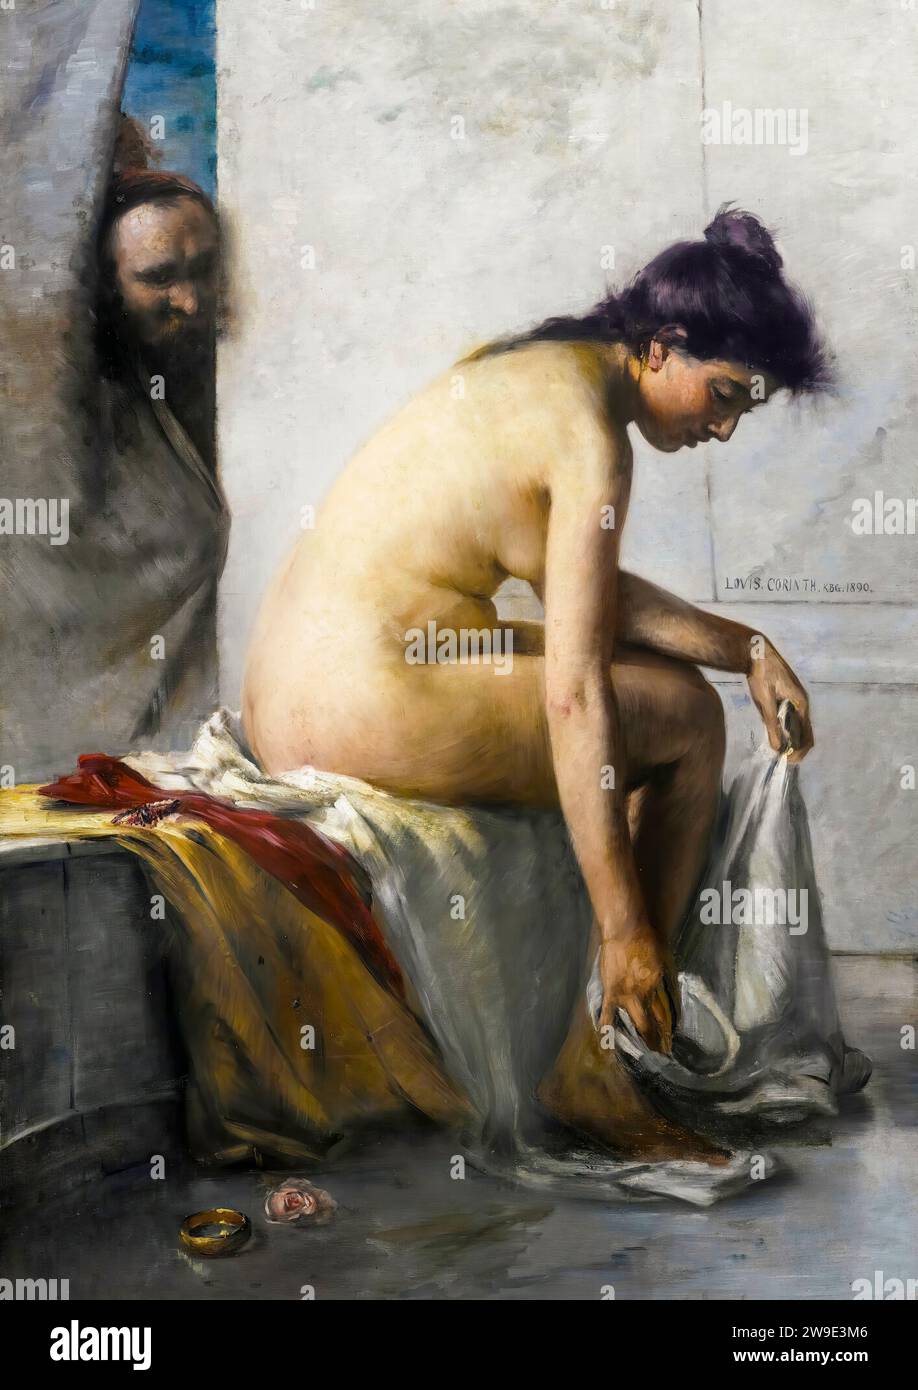 Lovis Corinth, Susanna im Bade (Susanna in the bath), painting in oil on canvas, 1890 Stock Photo